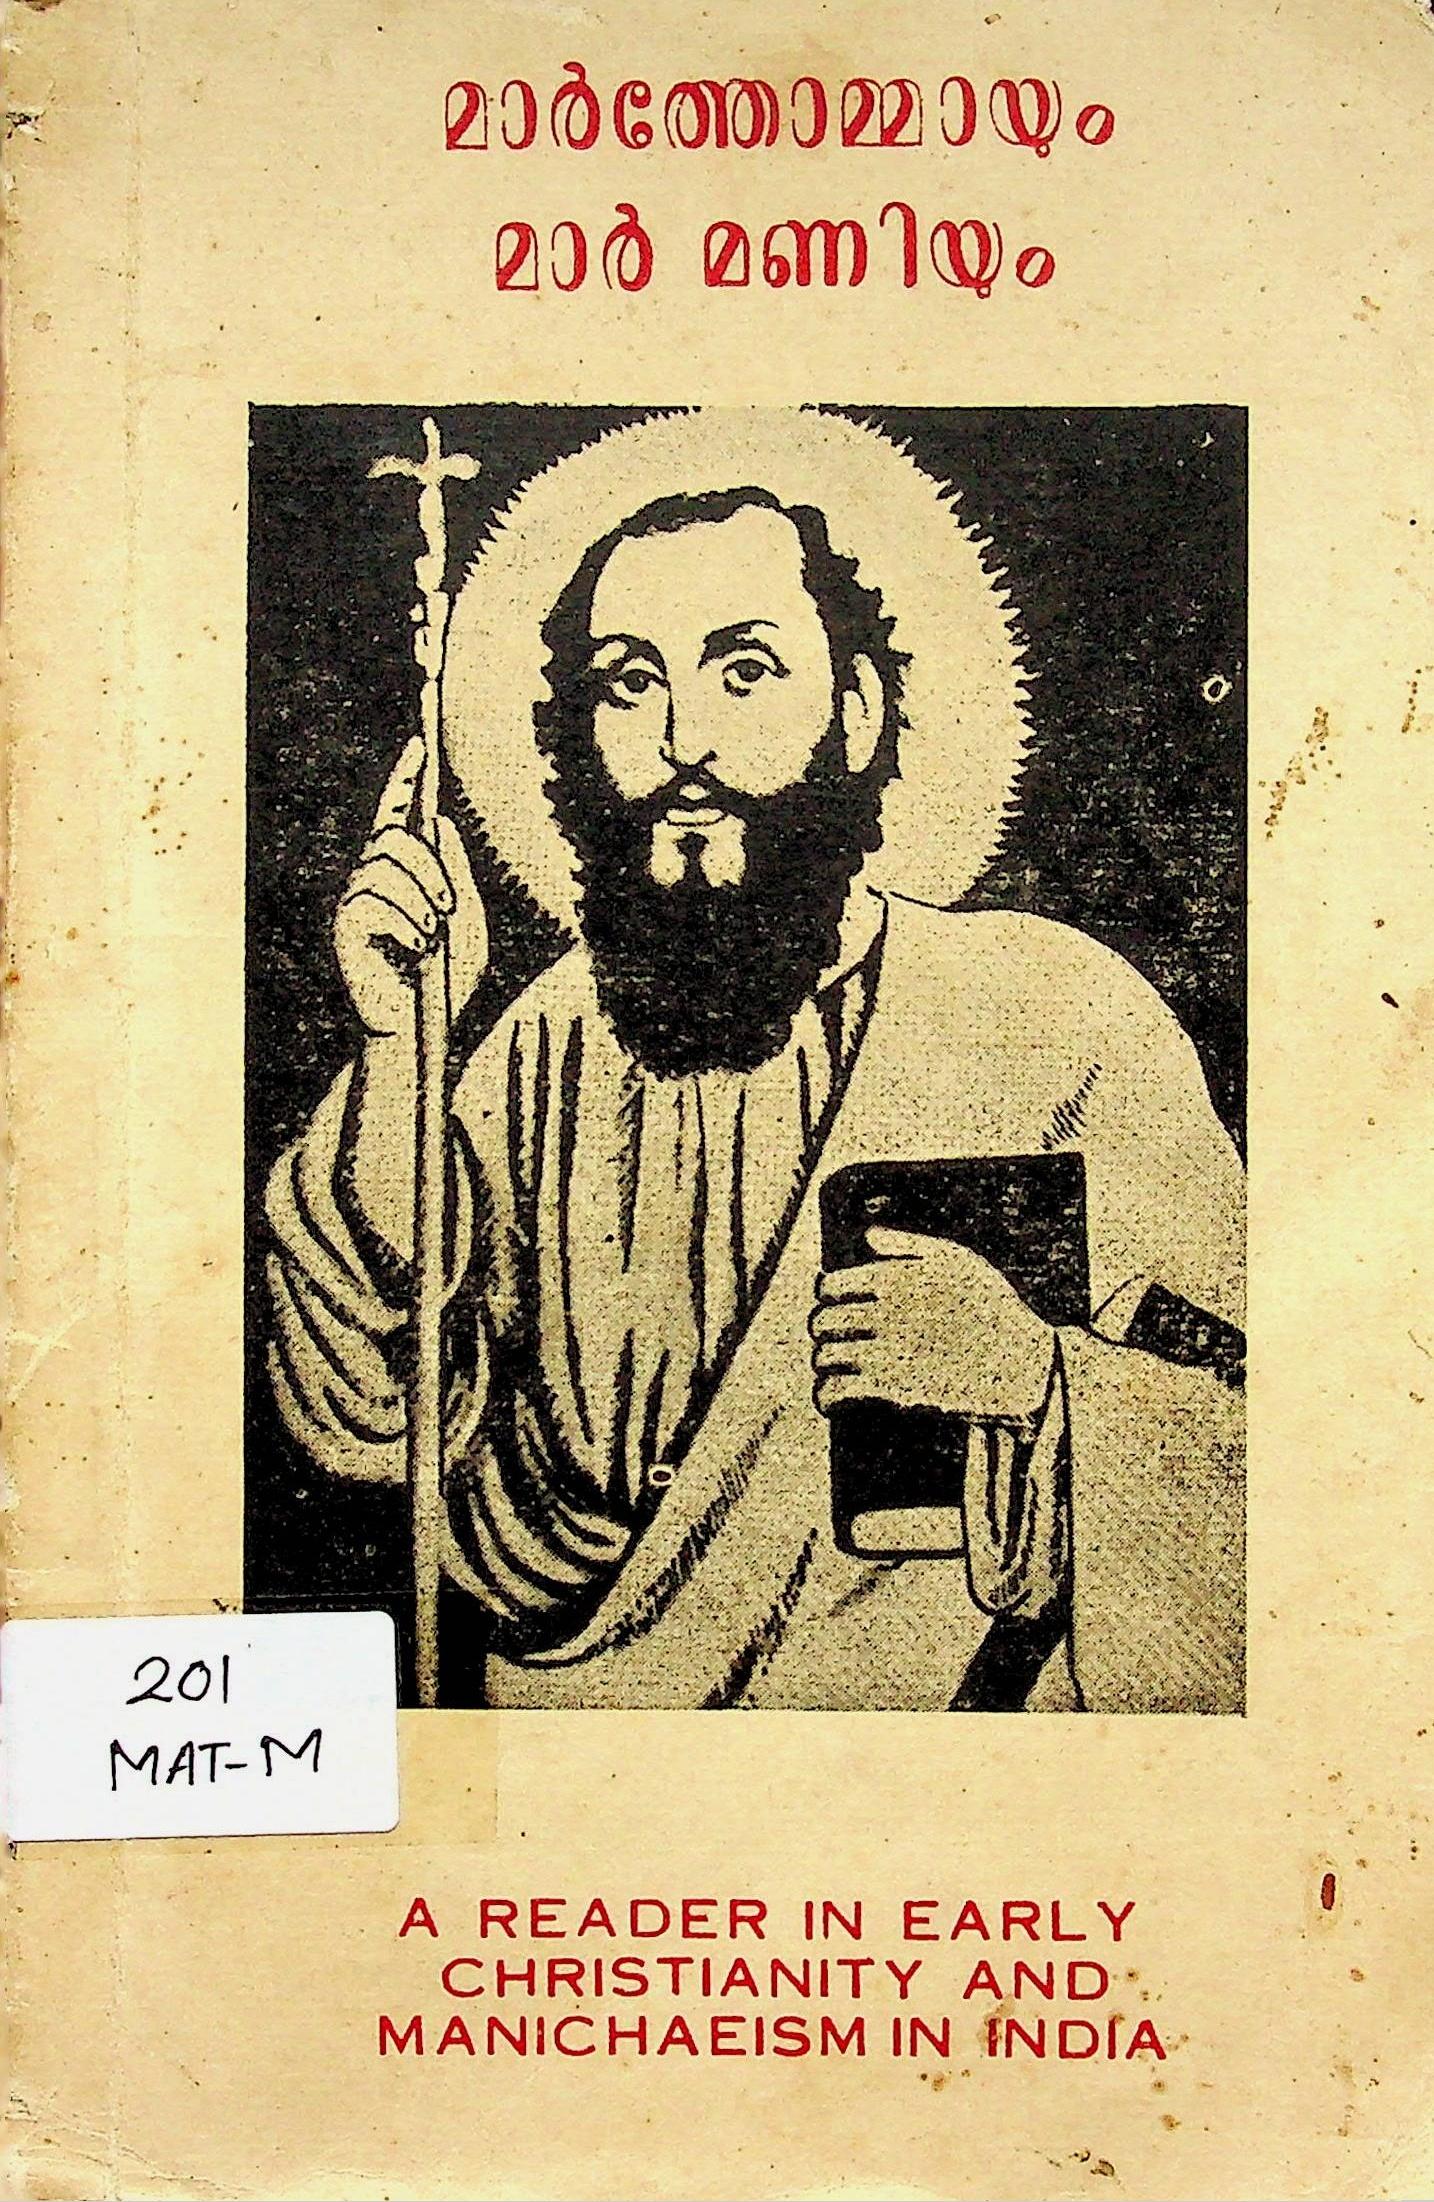 St. Thomas and Mar Mani